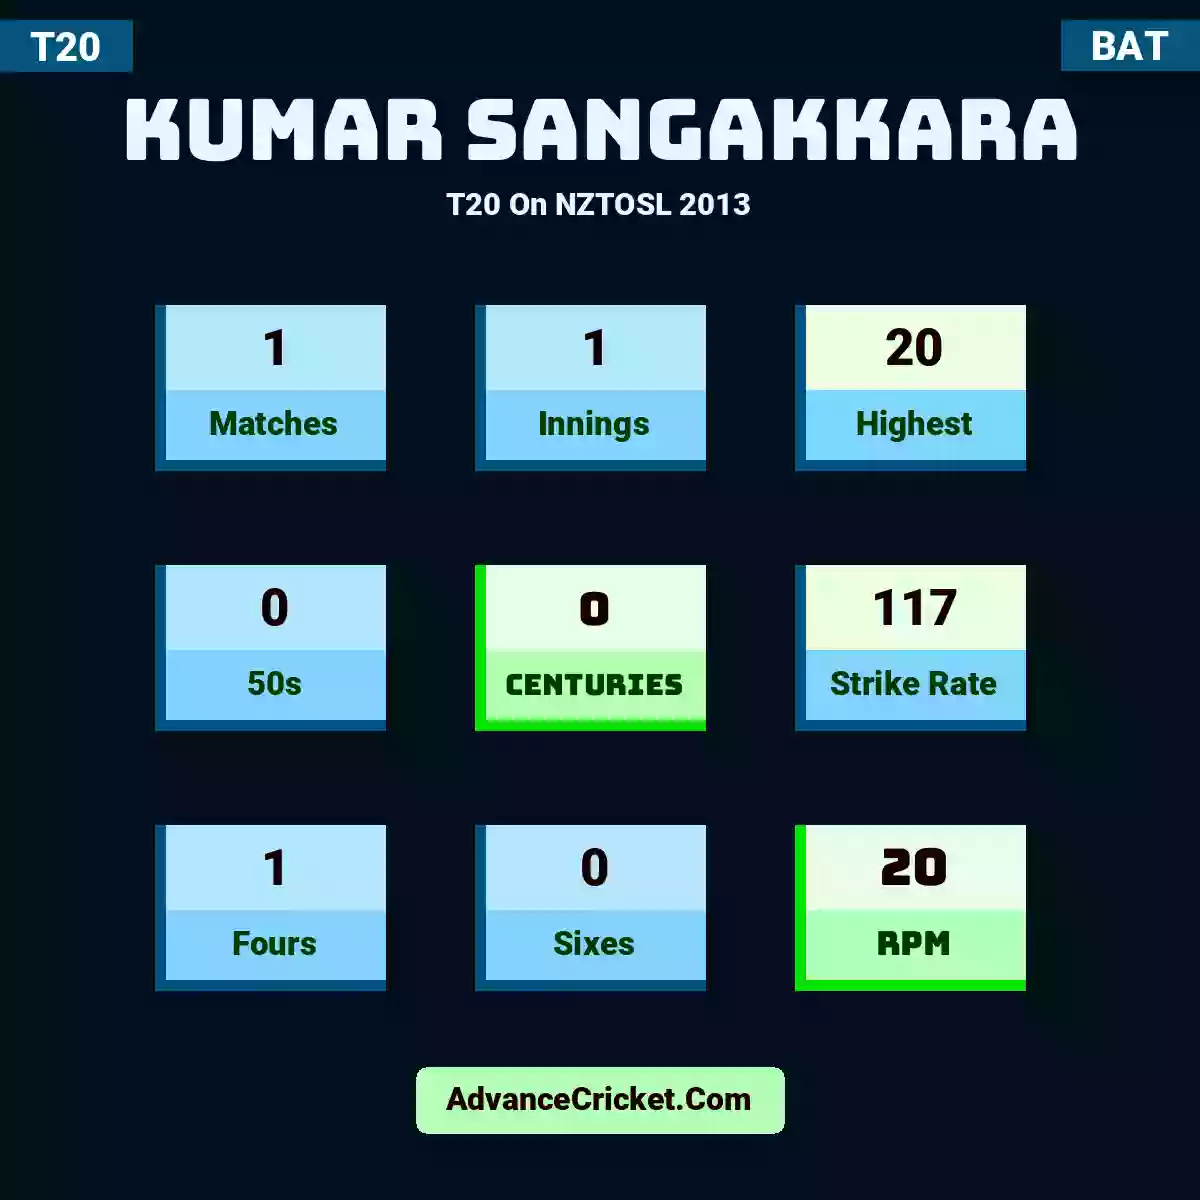 Kumar Sangakkara T20  On NZTOSL 2013, Kumar Sangakkara played 1 matches, scored 20 runs as highest, 0 half-centuries, and 0 centuries, with a strike rate of 117. K.Sangakkara hit 1 fours and 0 sixes, with an RPM of 20.